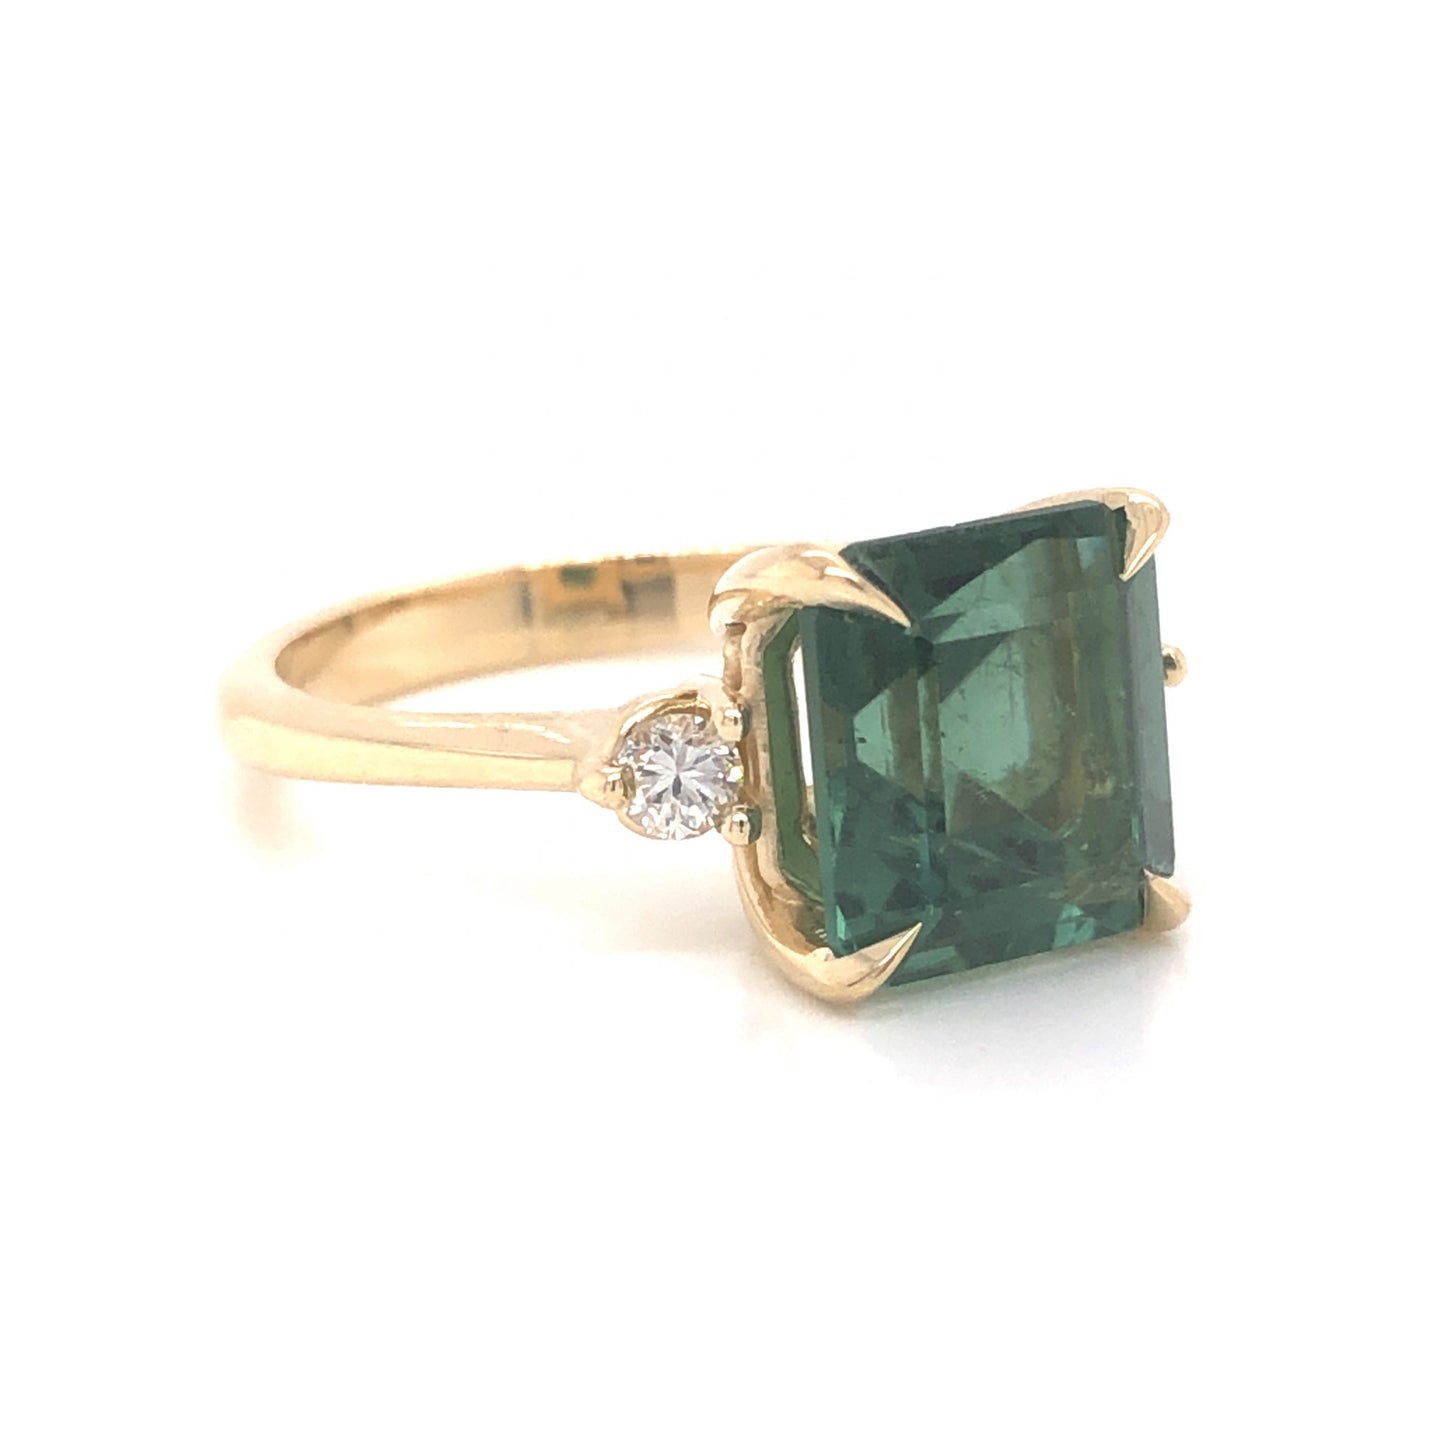 3.66 Square Emerald Cut Tourmaline & Diamond Ring in 14k Yellow Gold